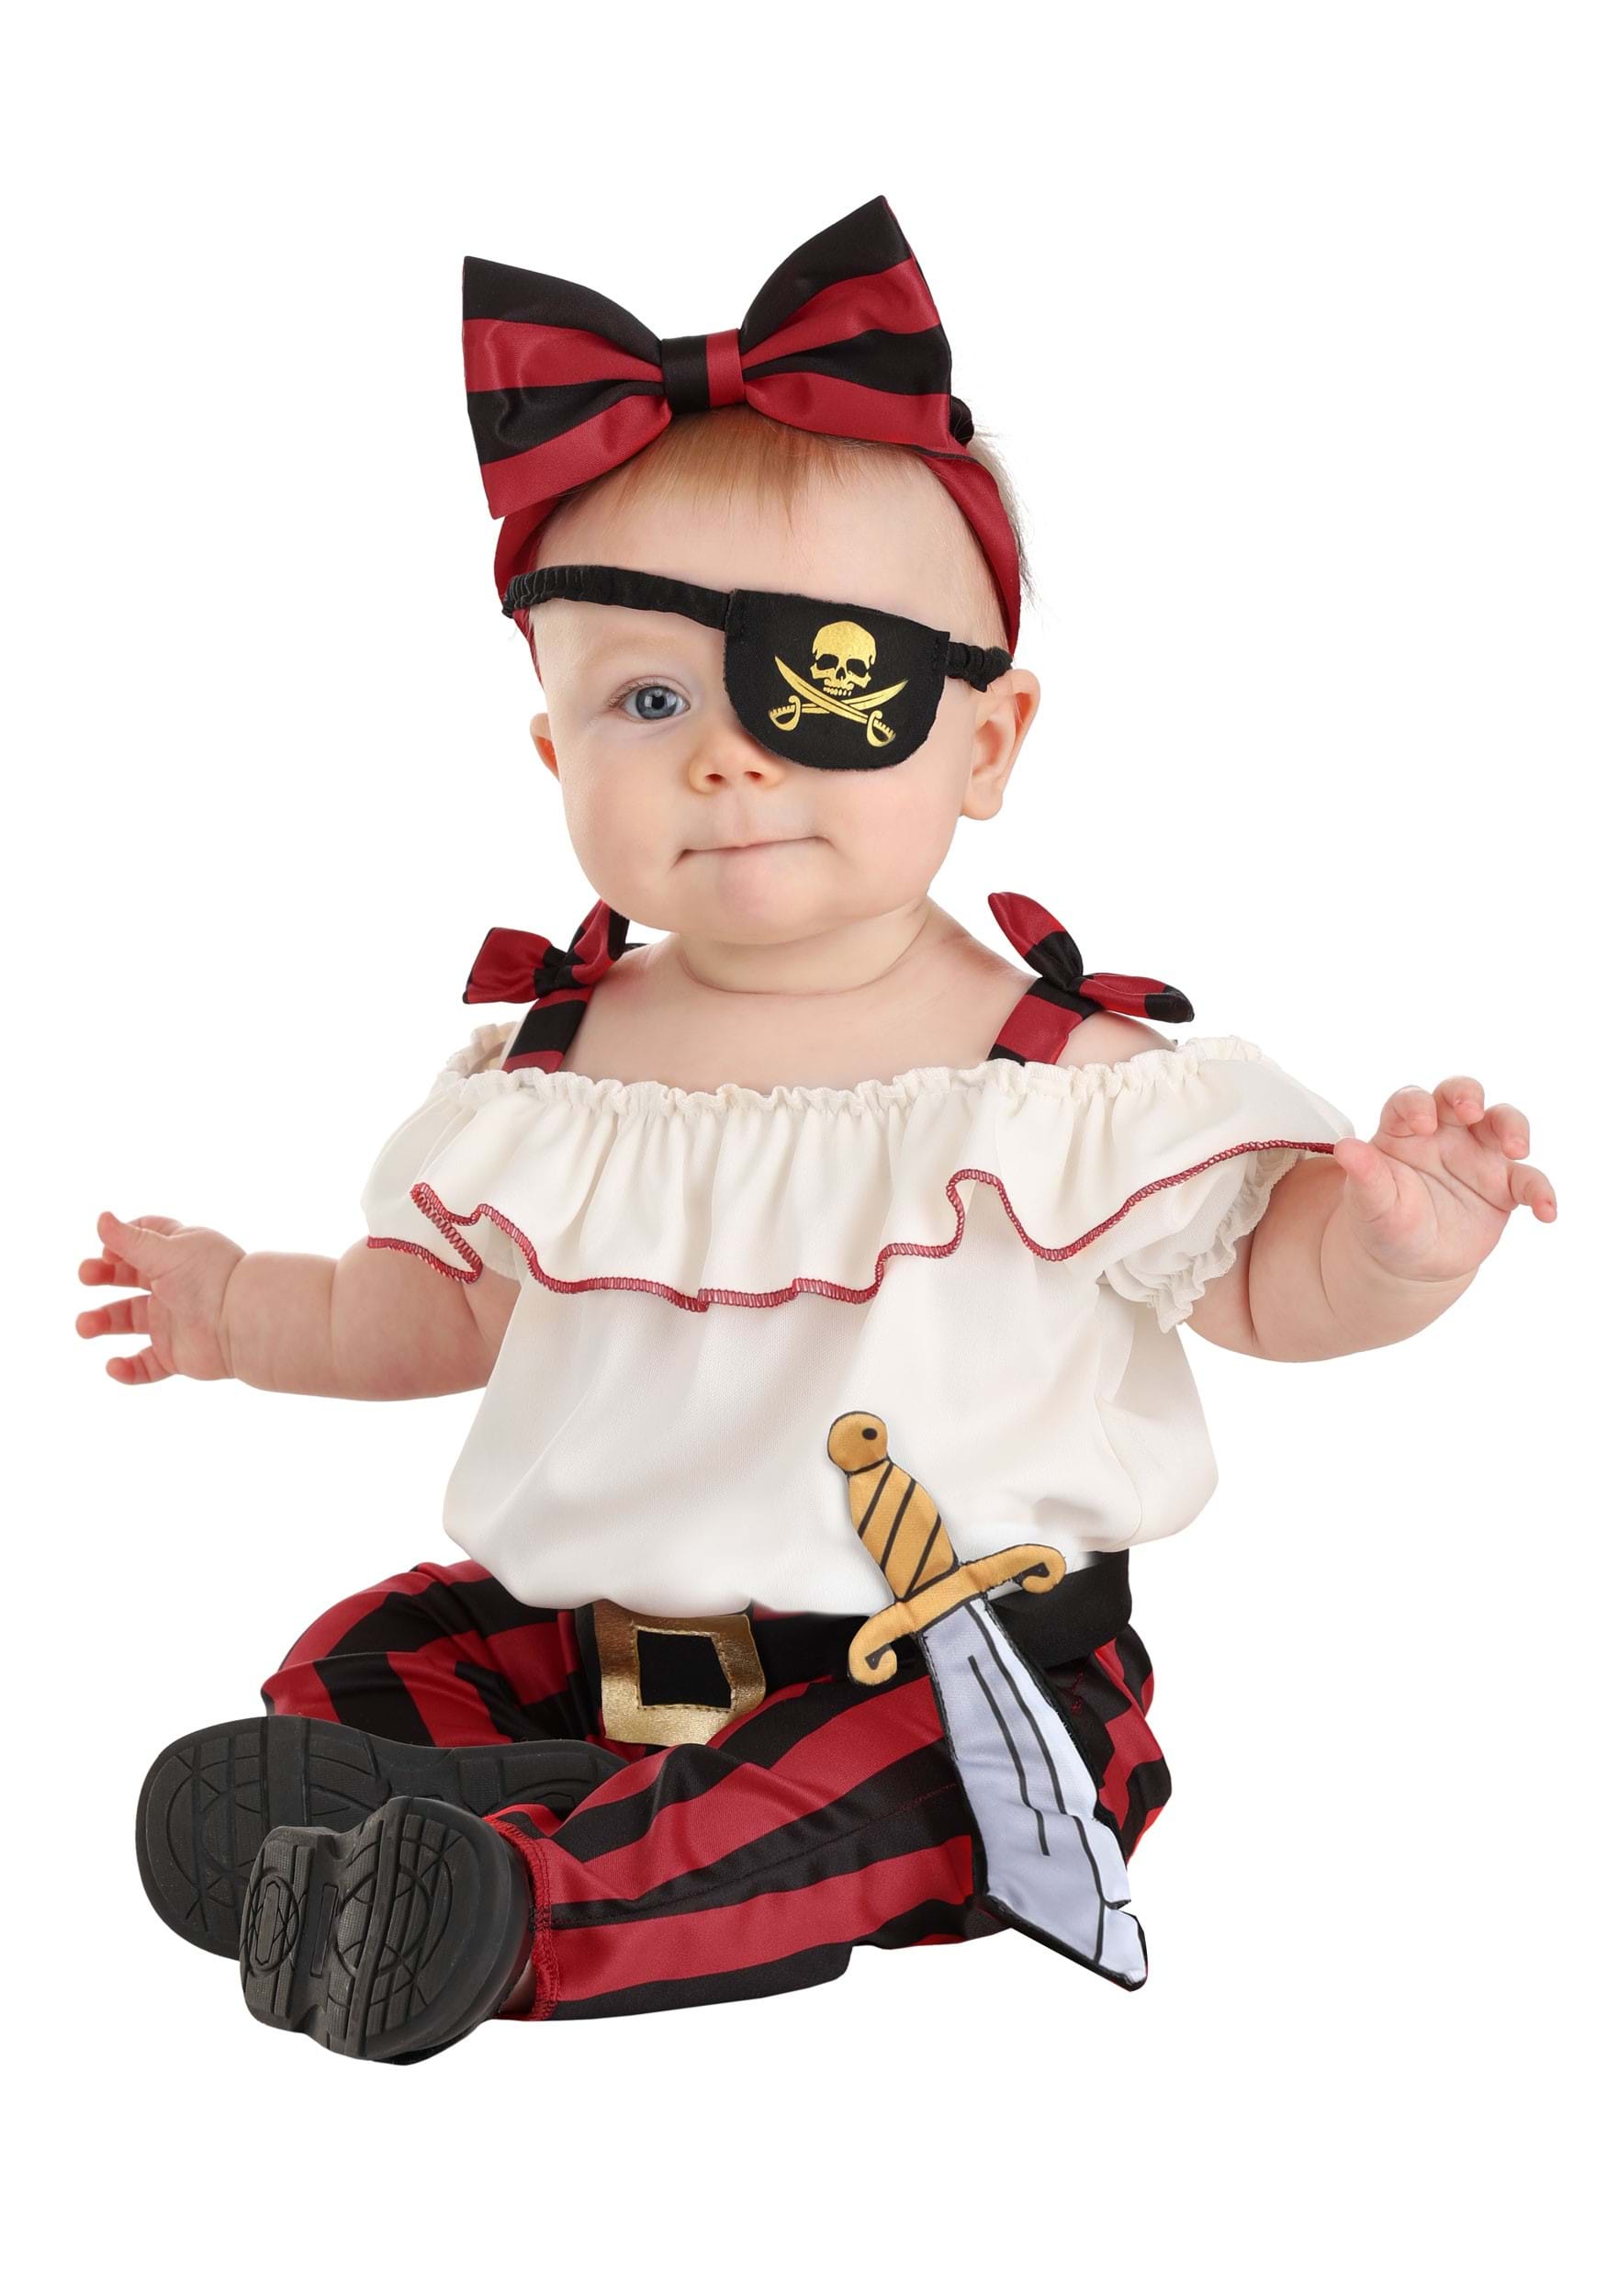 infant pirates jersey